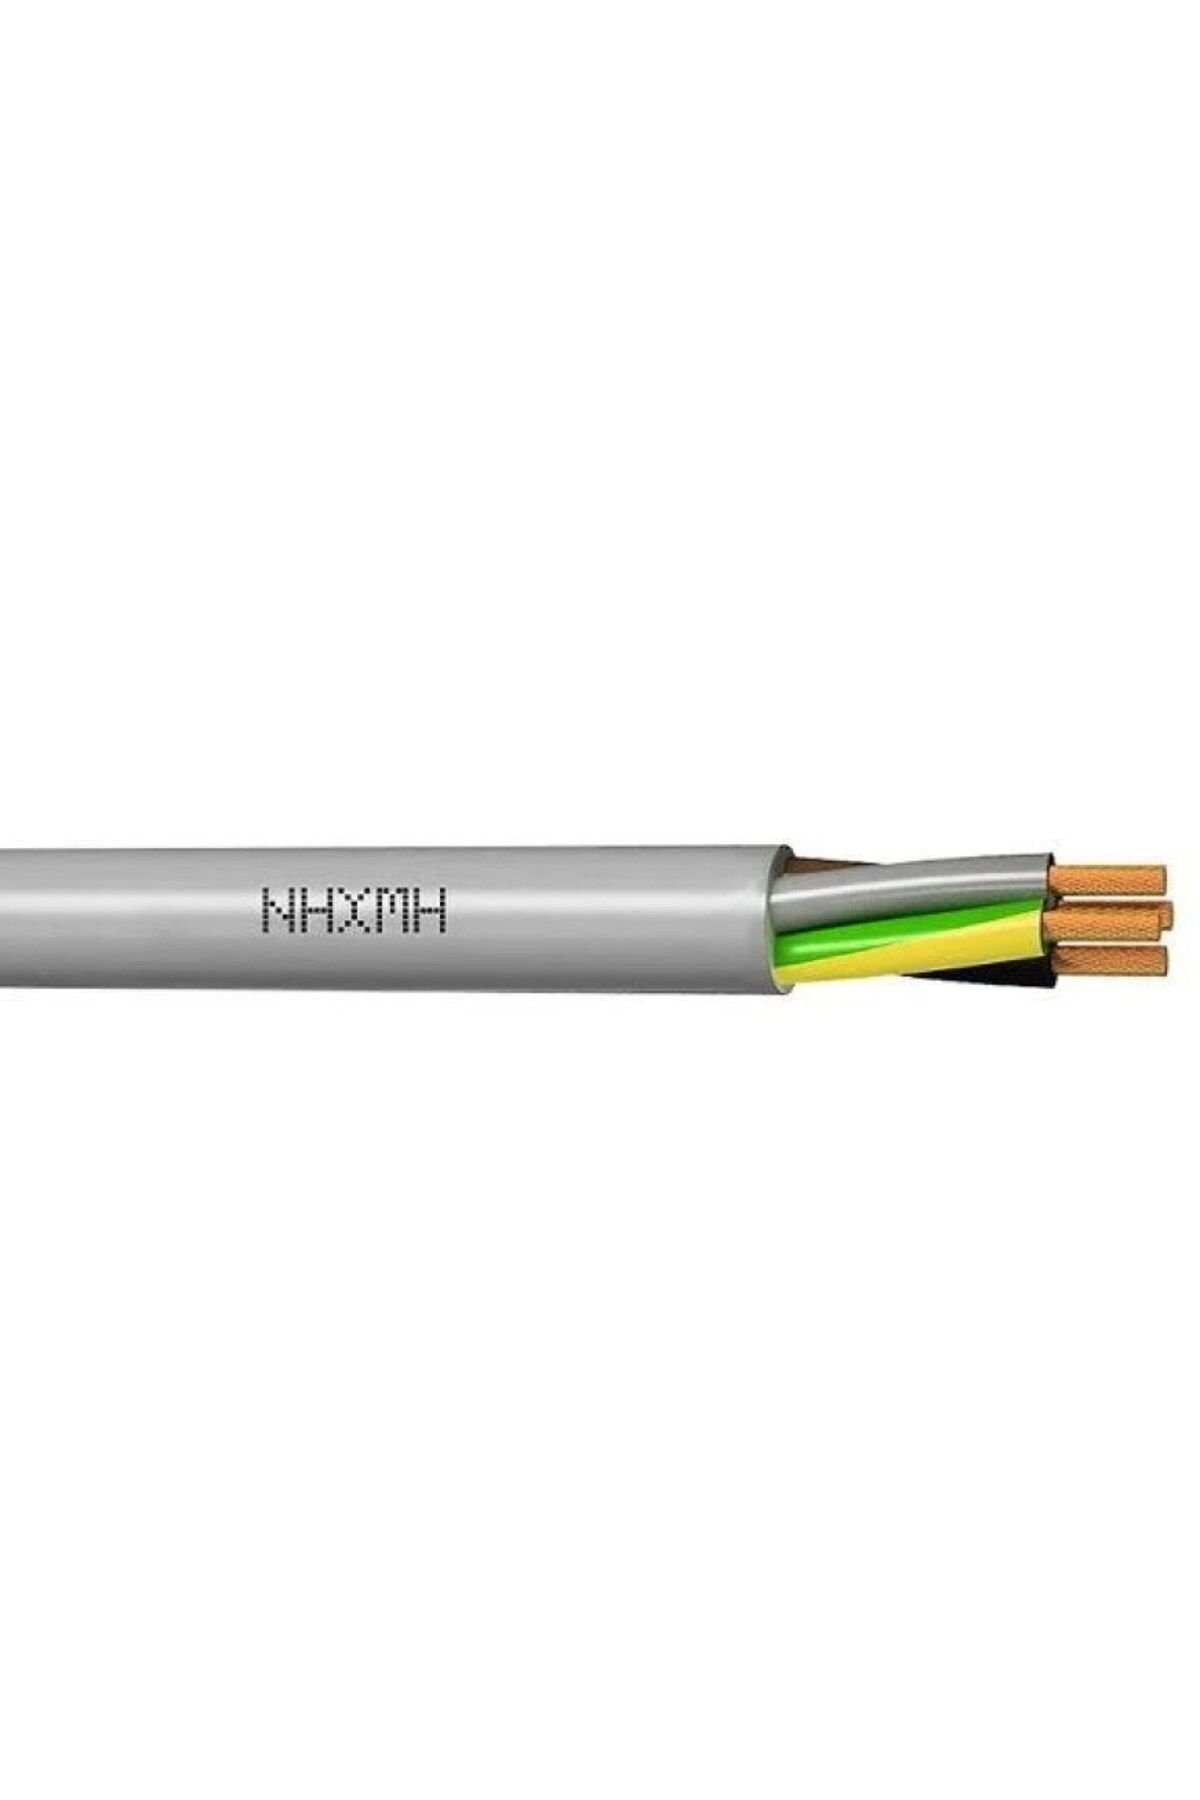 ÖZNUR 30 Metre 5x4 NHXMH Halogen Free Kablo Öznur Kablo